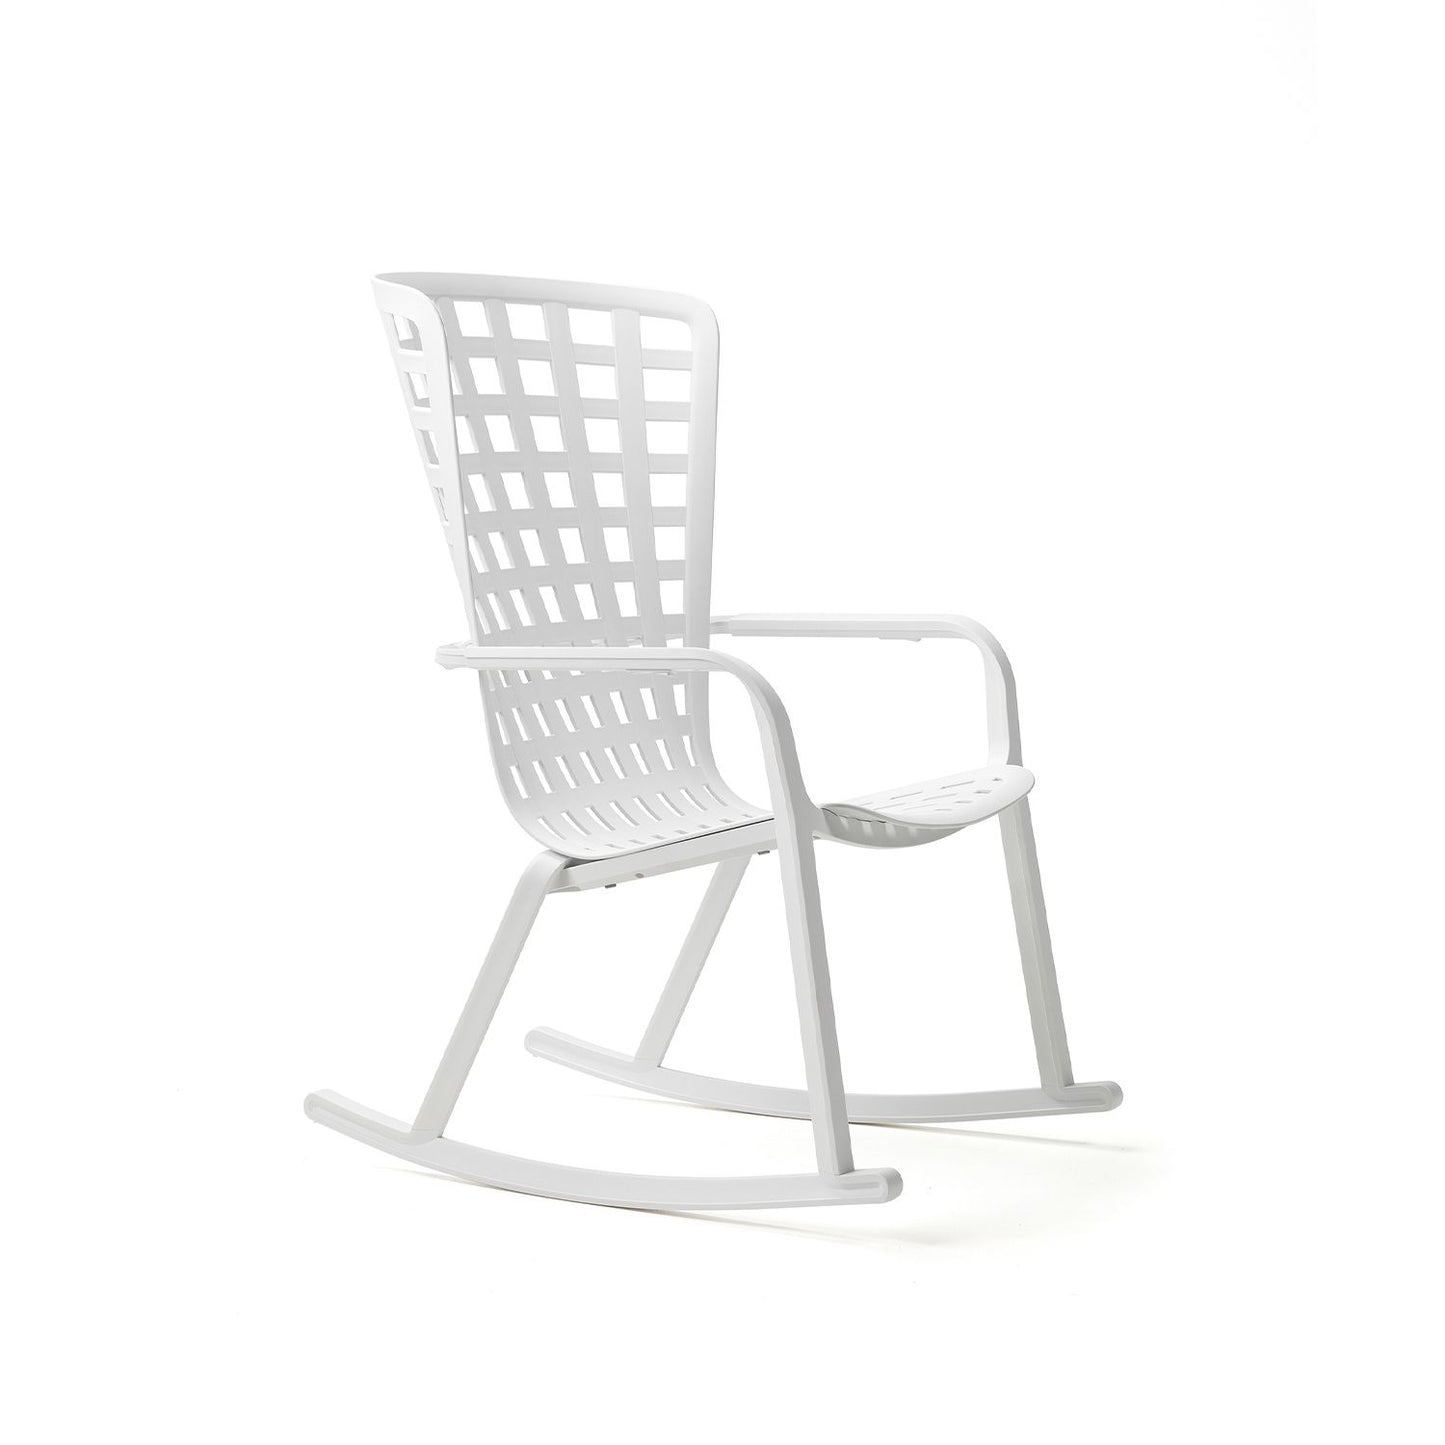 Folio Rocking Chair By Nardi